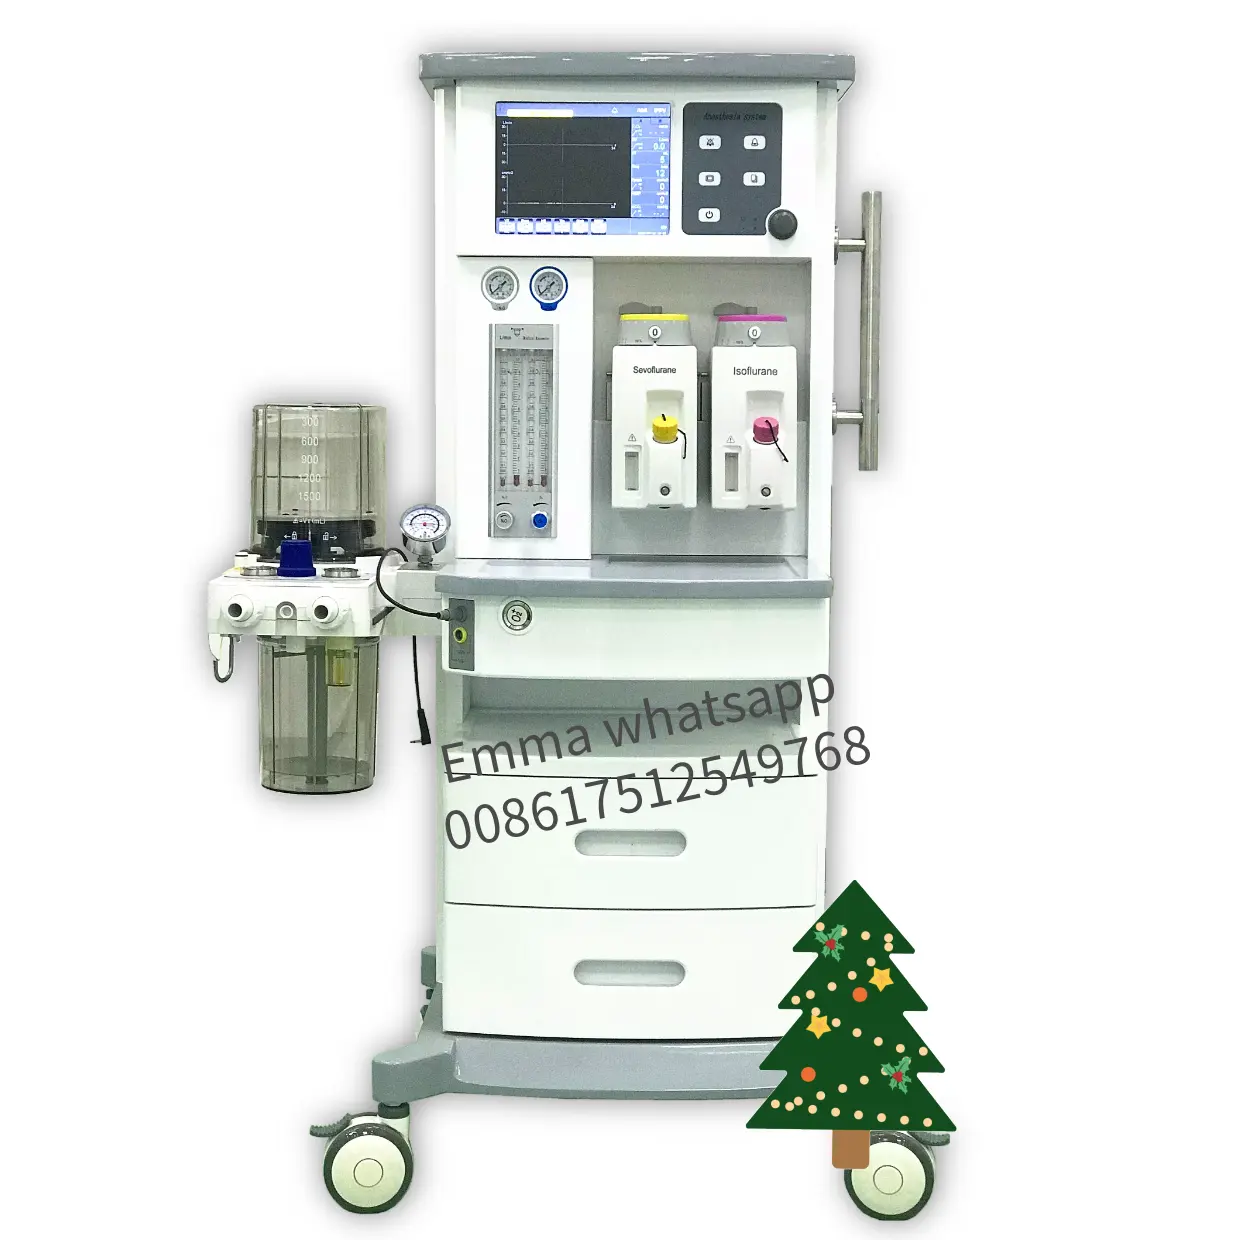 Carefusion S6500A Big Screen Hospital Operation Room Equipment Surgery Ventilation Anesthesia Ventilator Workstation Machine